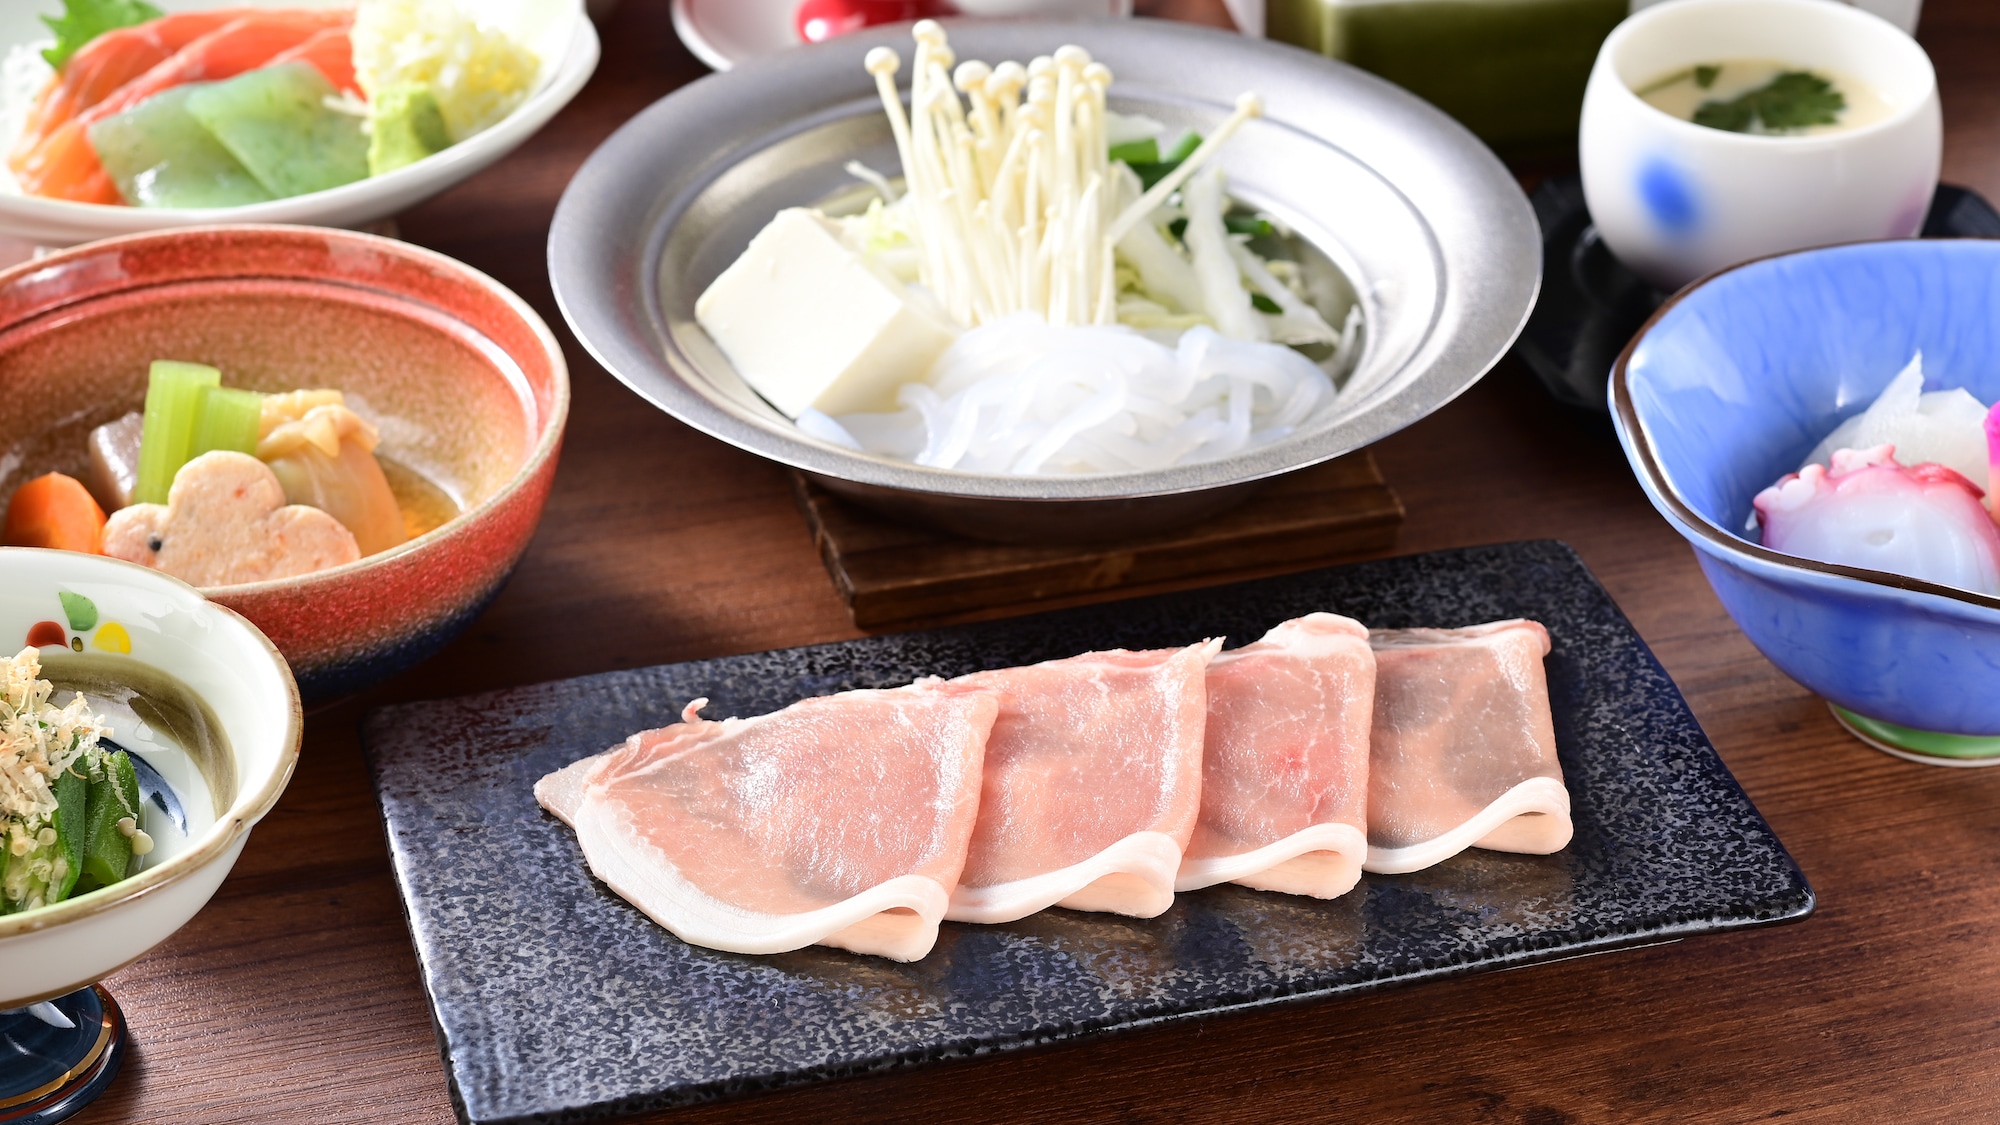 “Kozuke Mochi豬肉”的涮涮鍋，這是一種具有白色脂肪、甜味和優良肉質的優質豬肉。